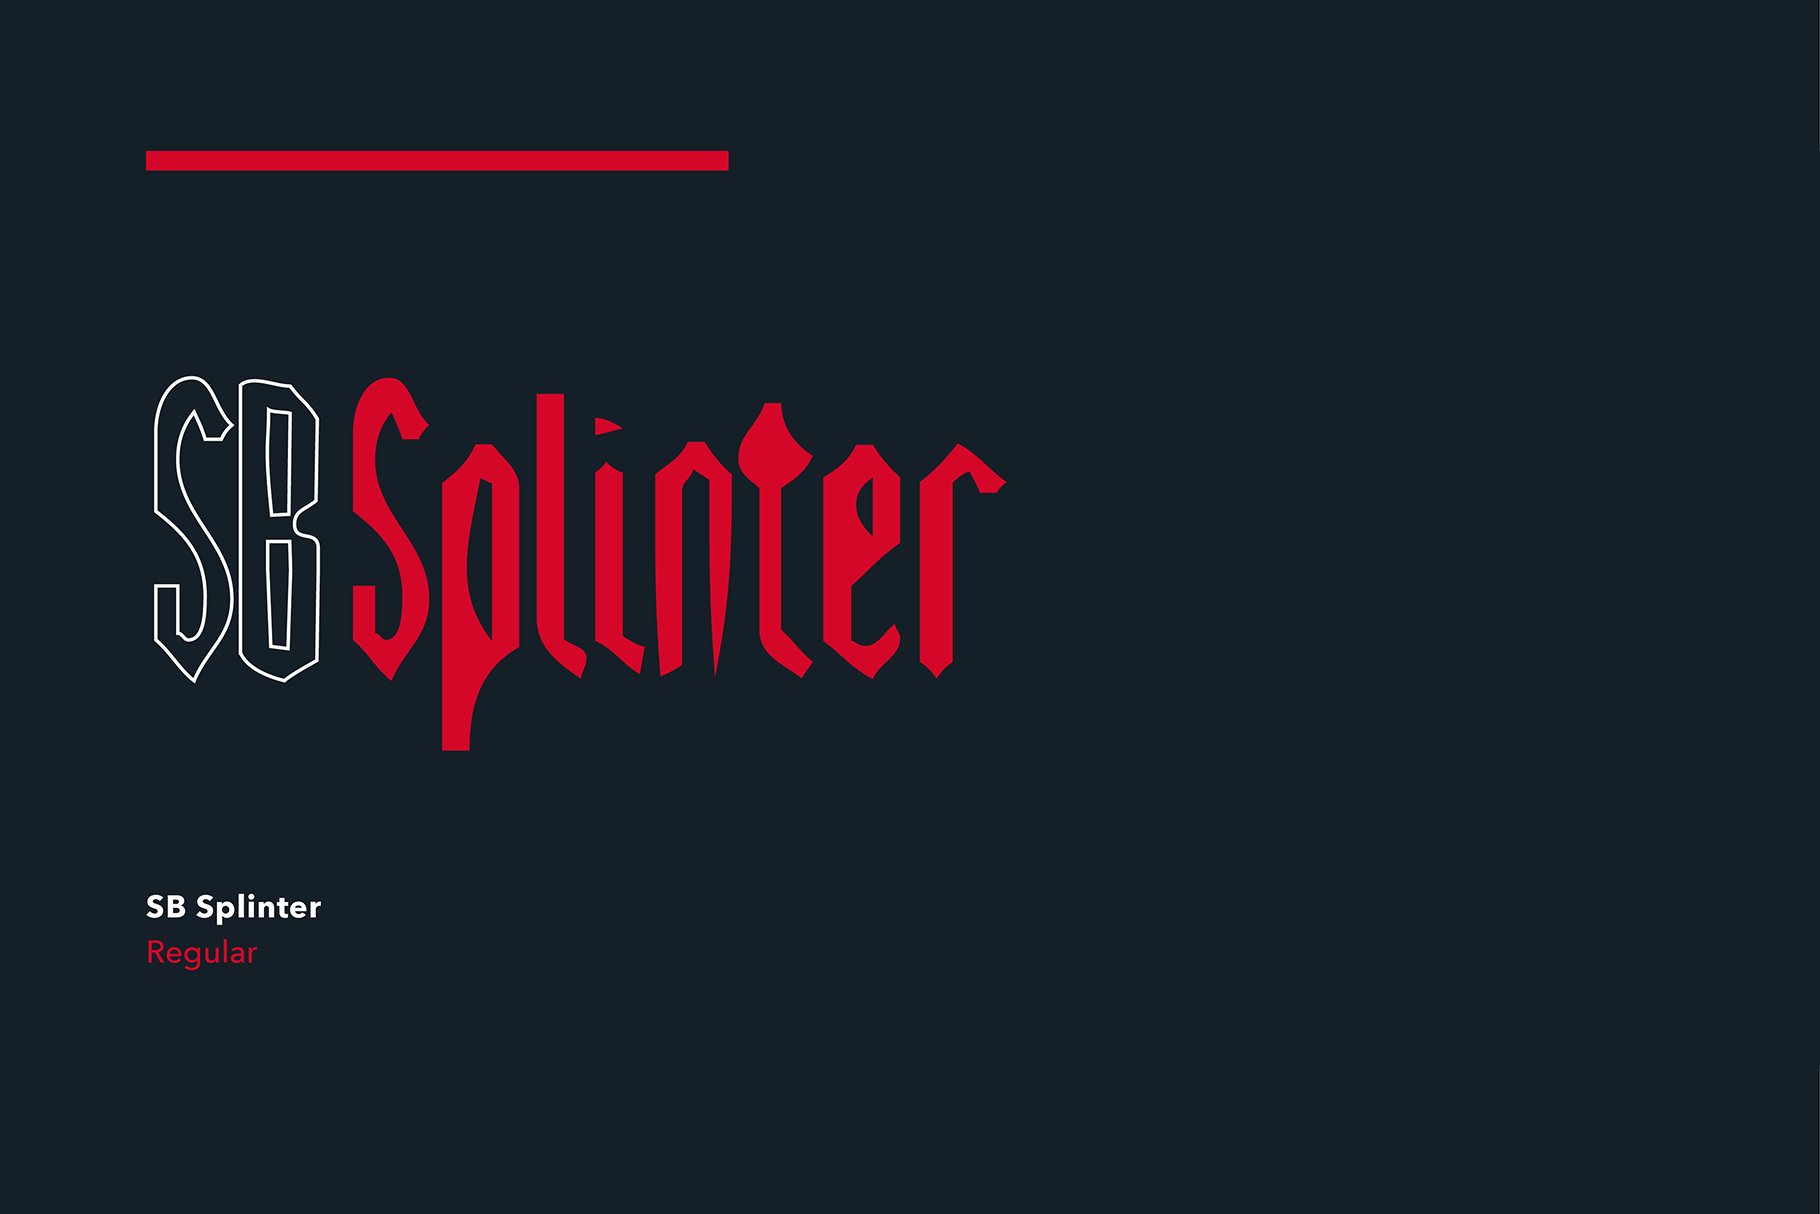 sb splinter 1 789